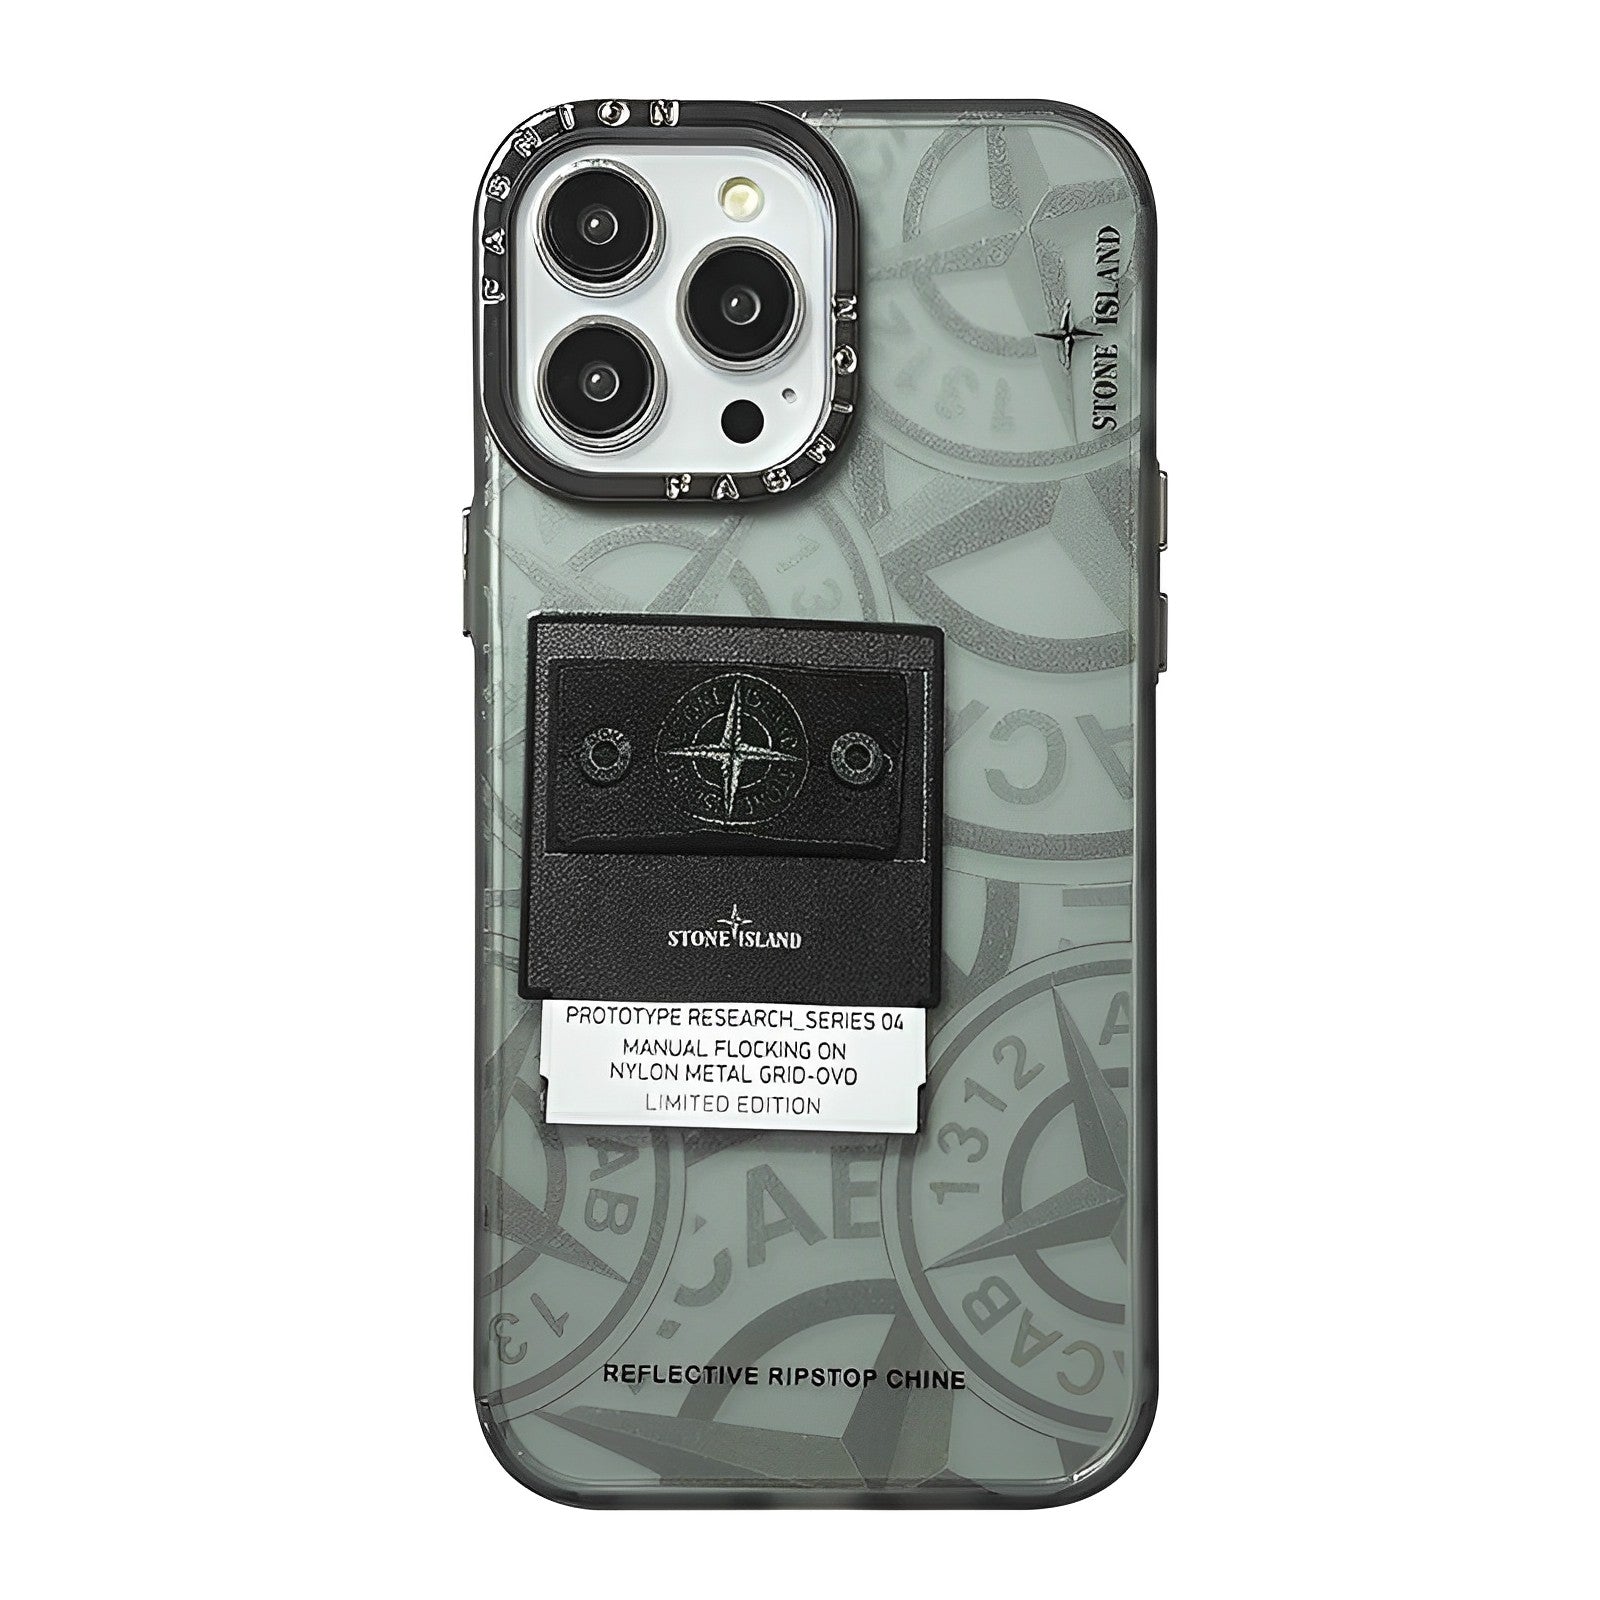 Stone island iPhone Case